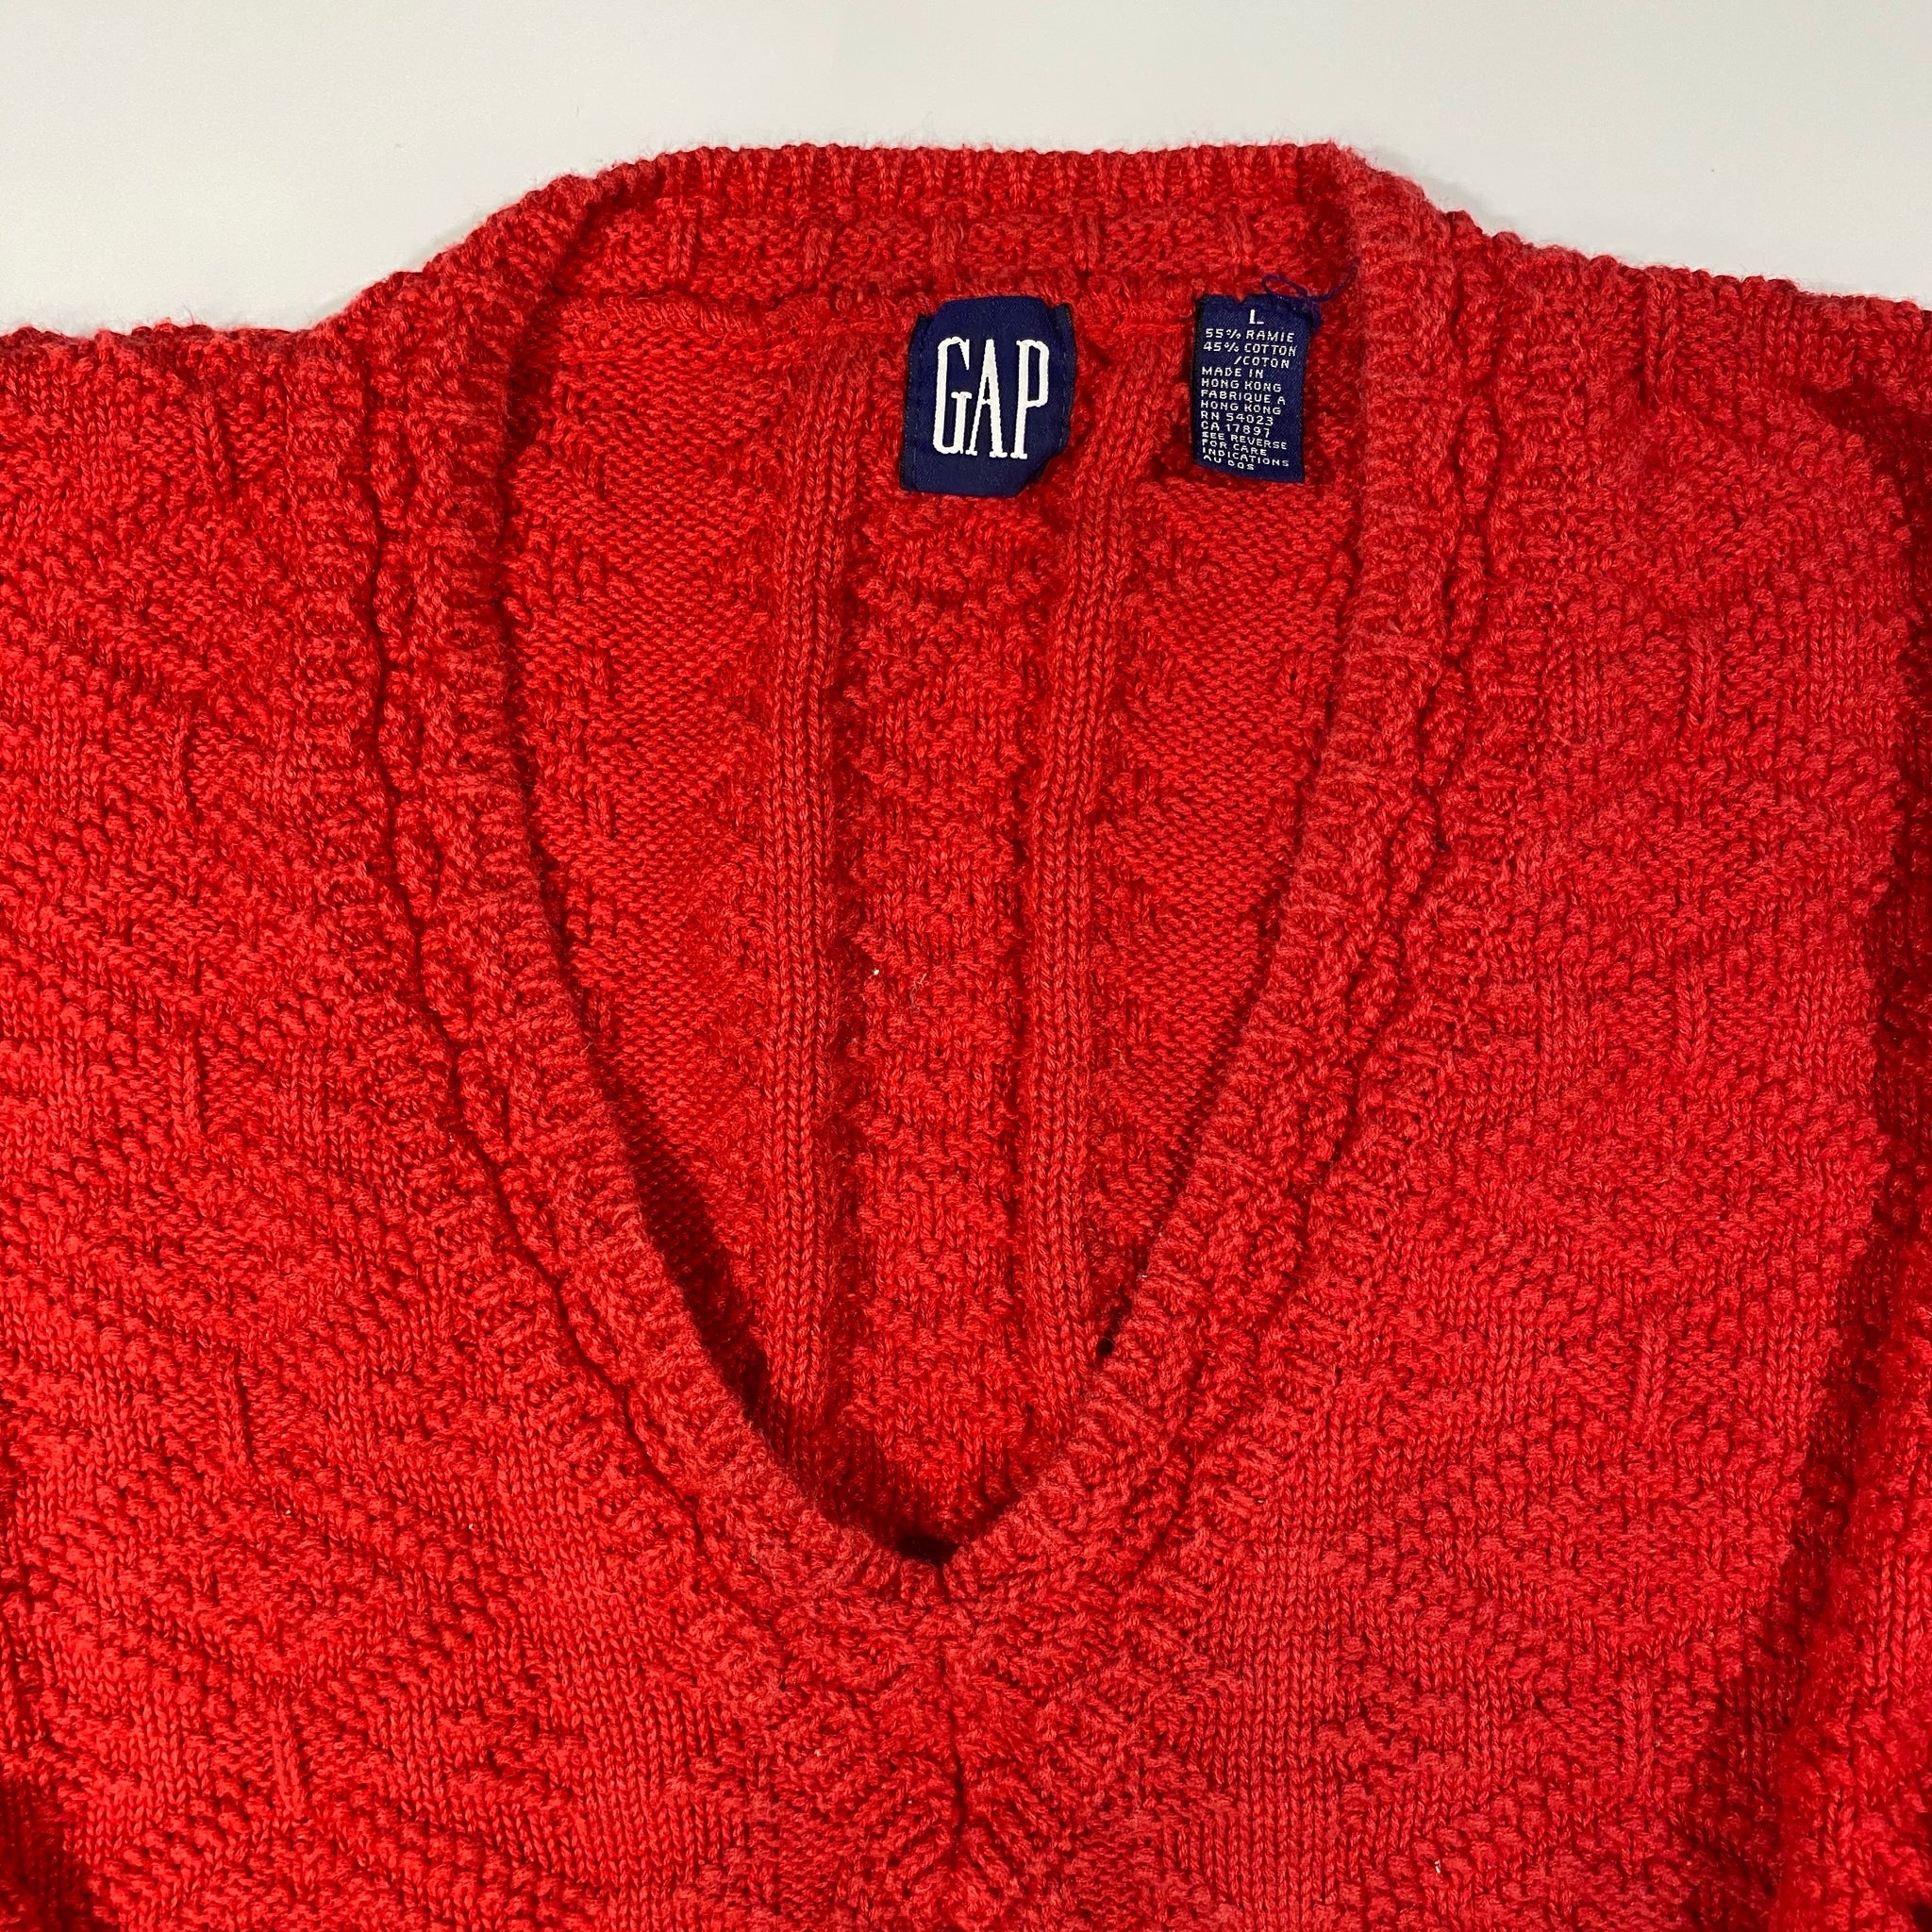 Gap cotton sweater. large